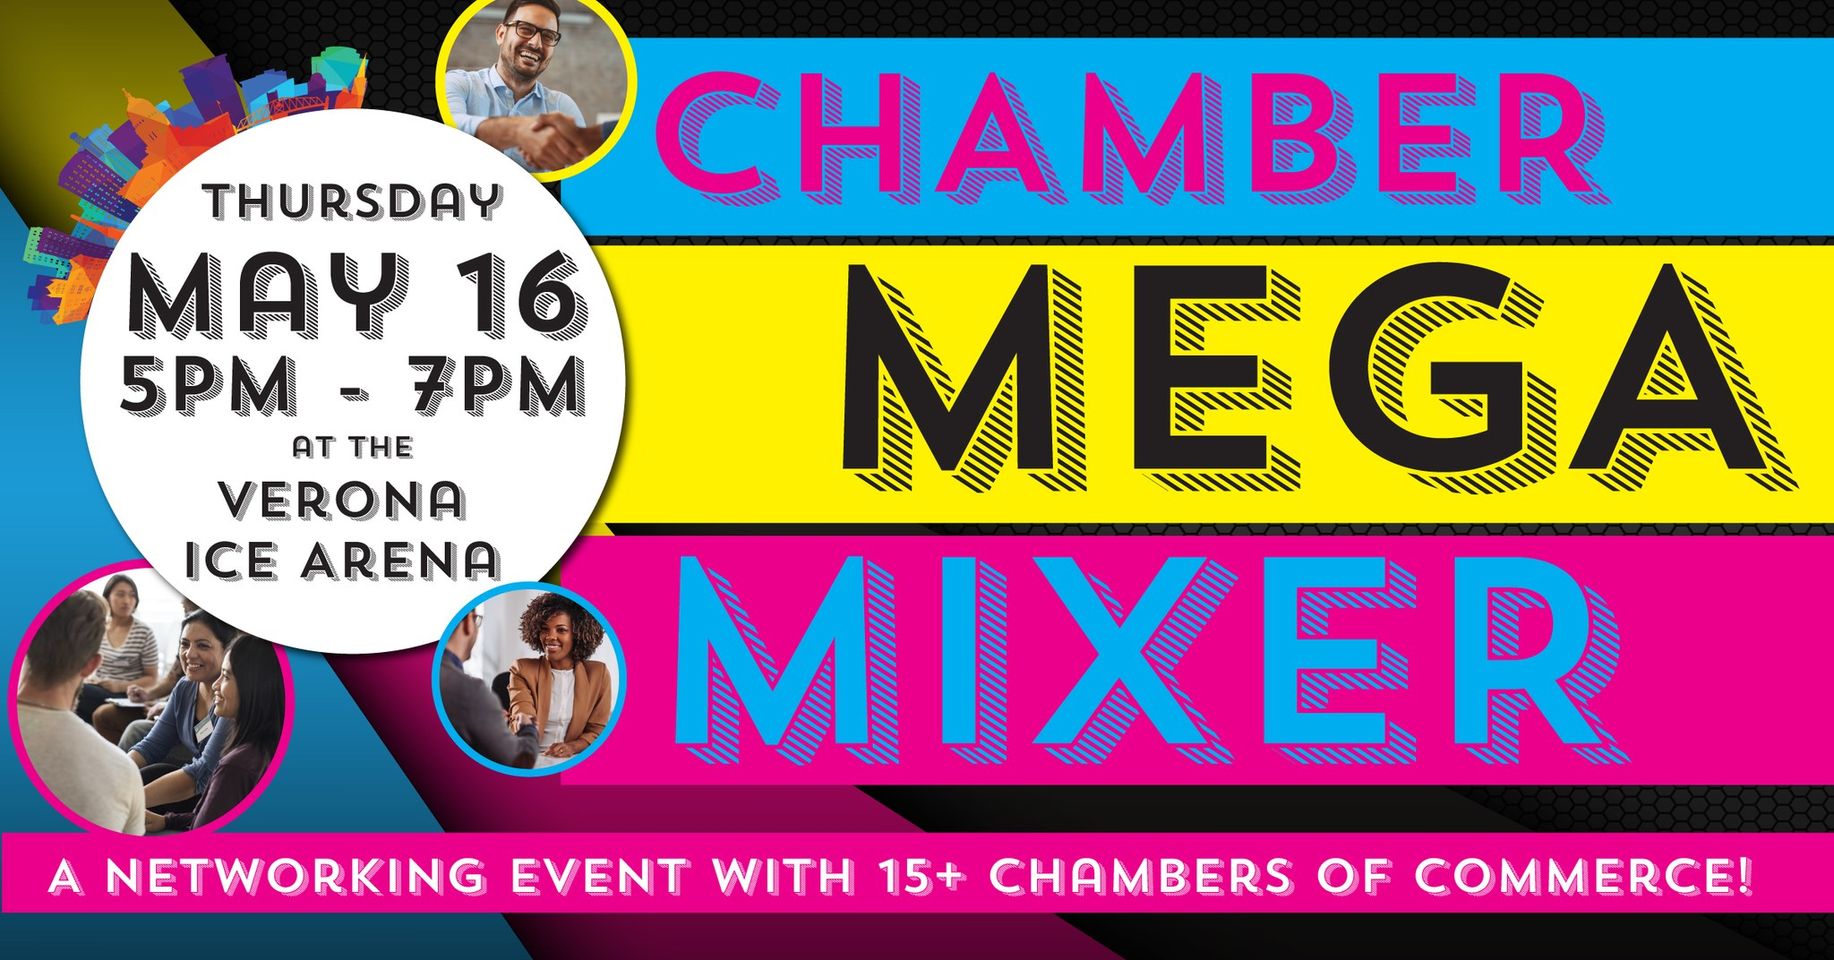 Chamber Mega Mixer